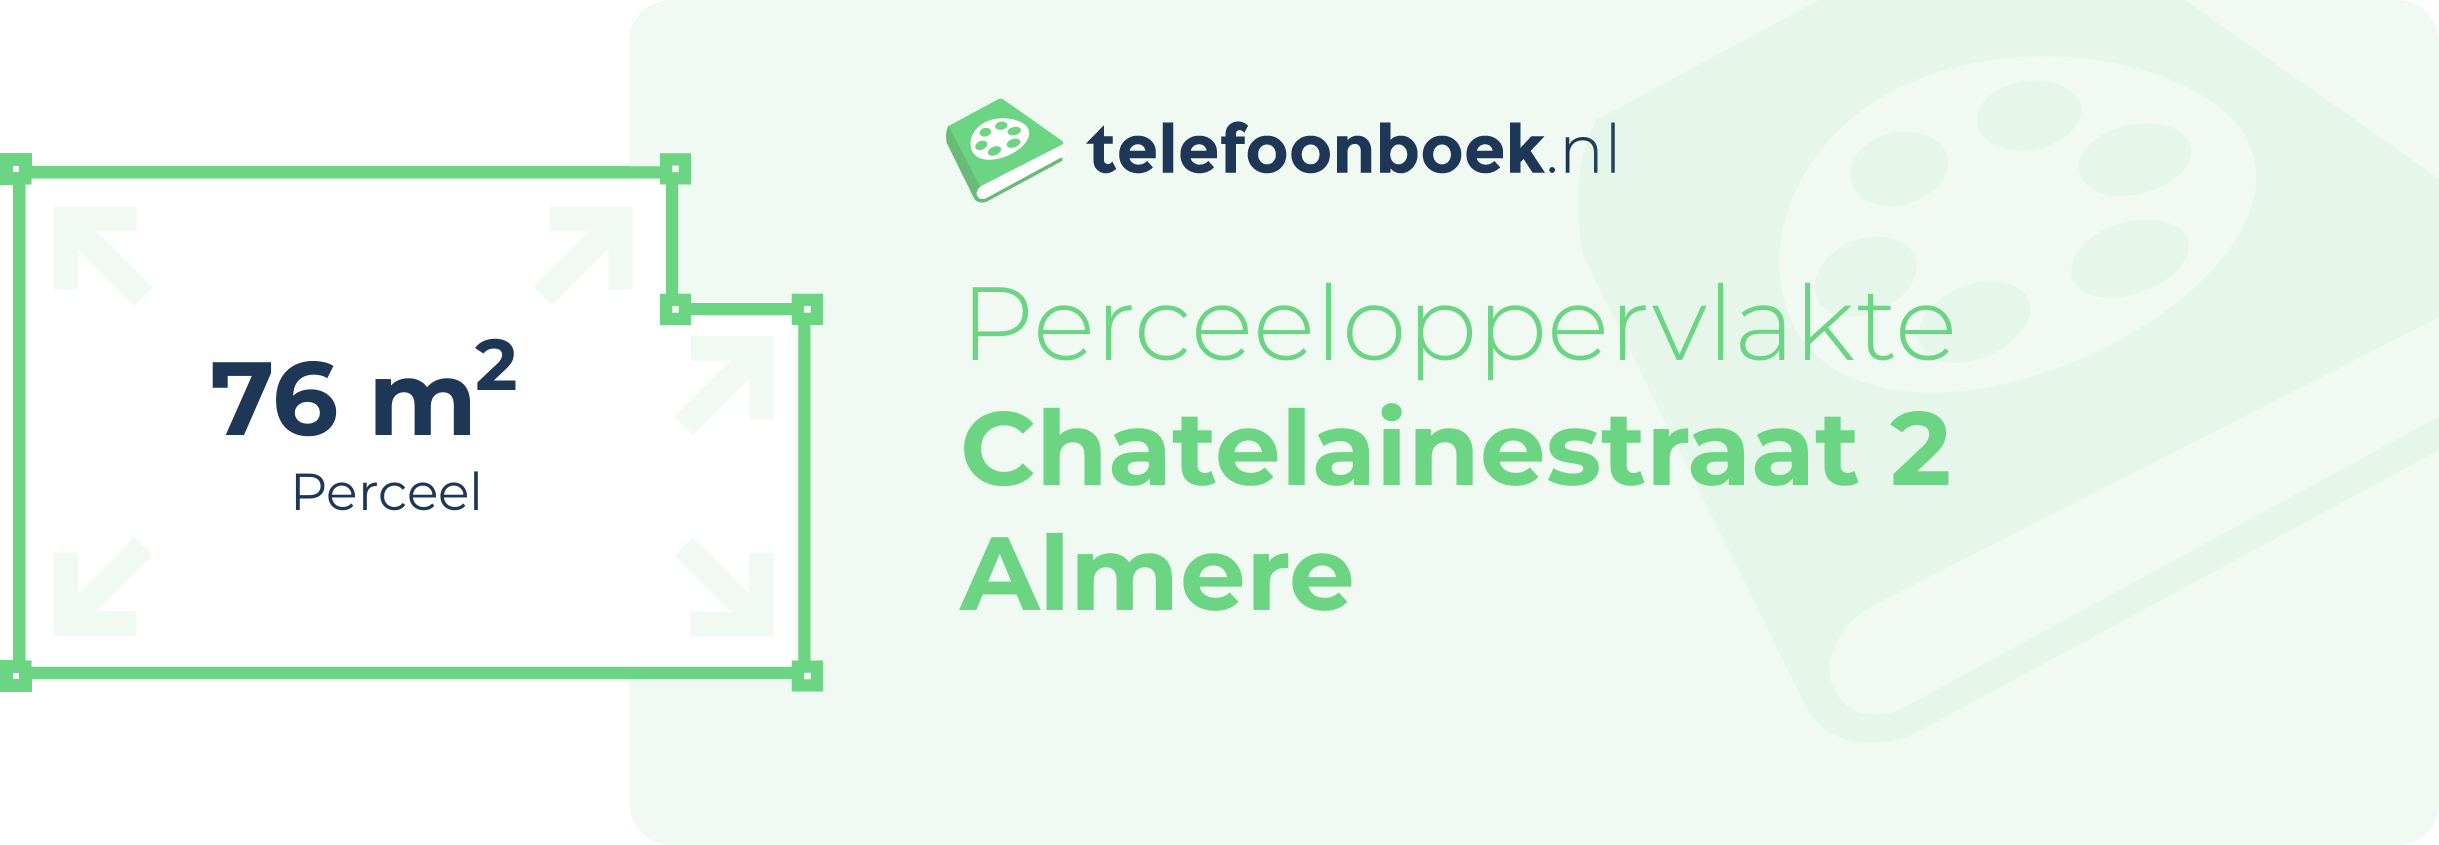 Perceeloppervlakte Chatelainestraat 2 Almere